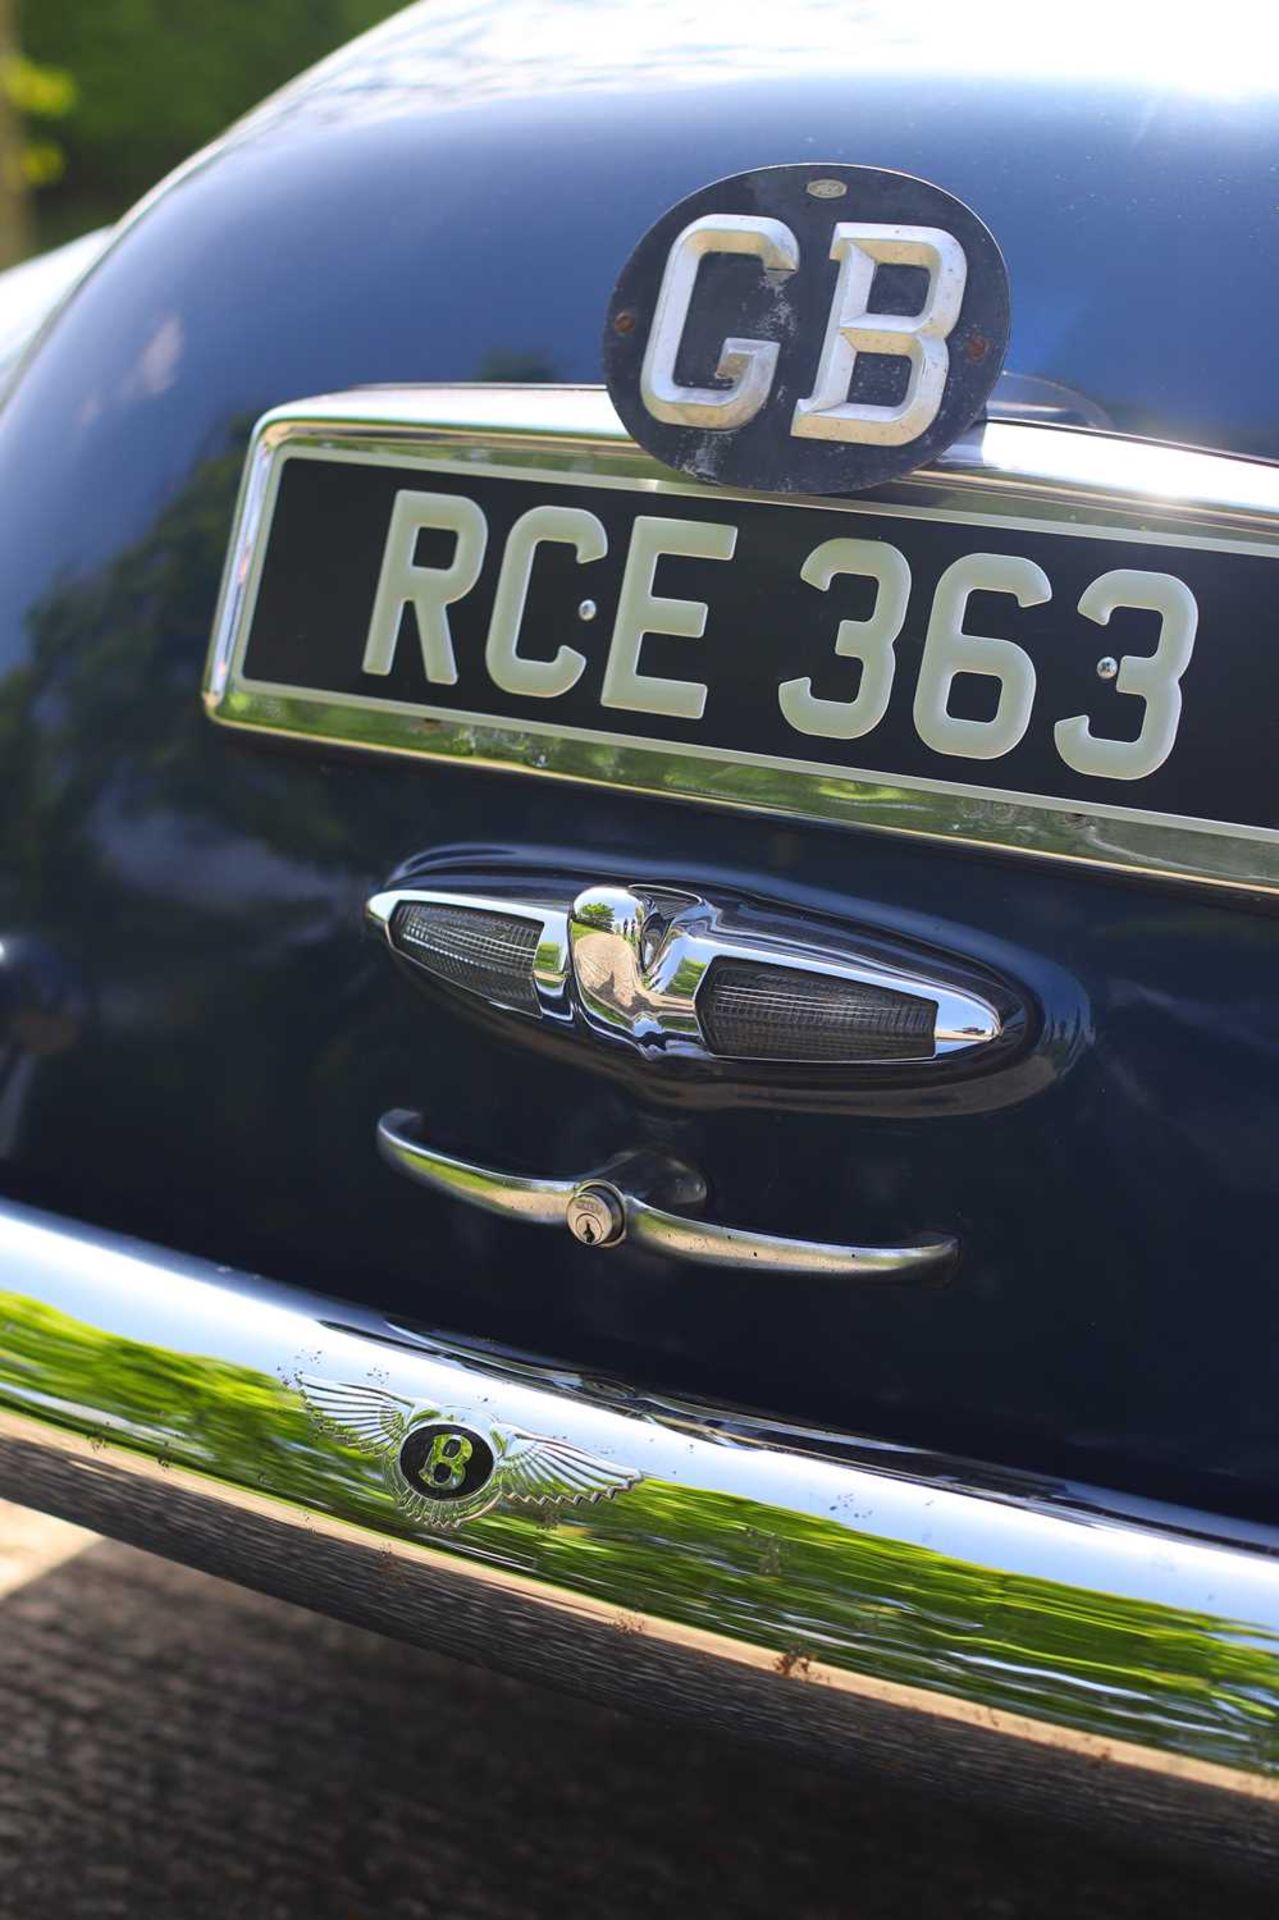 1957 Bentley S1 (E-series) Saloon - Image 12 of 71